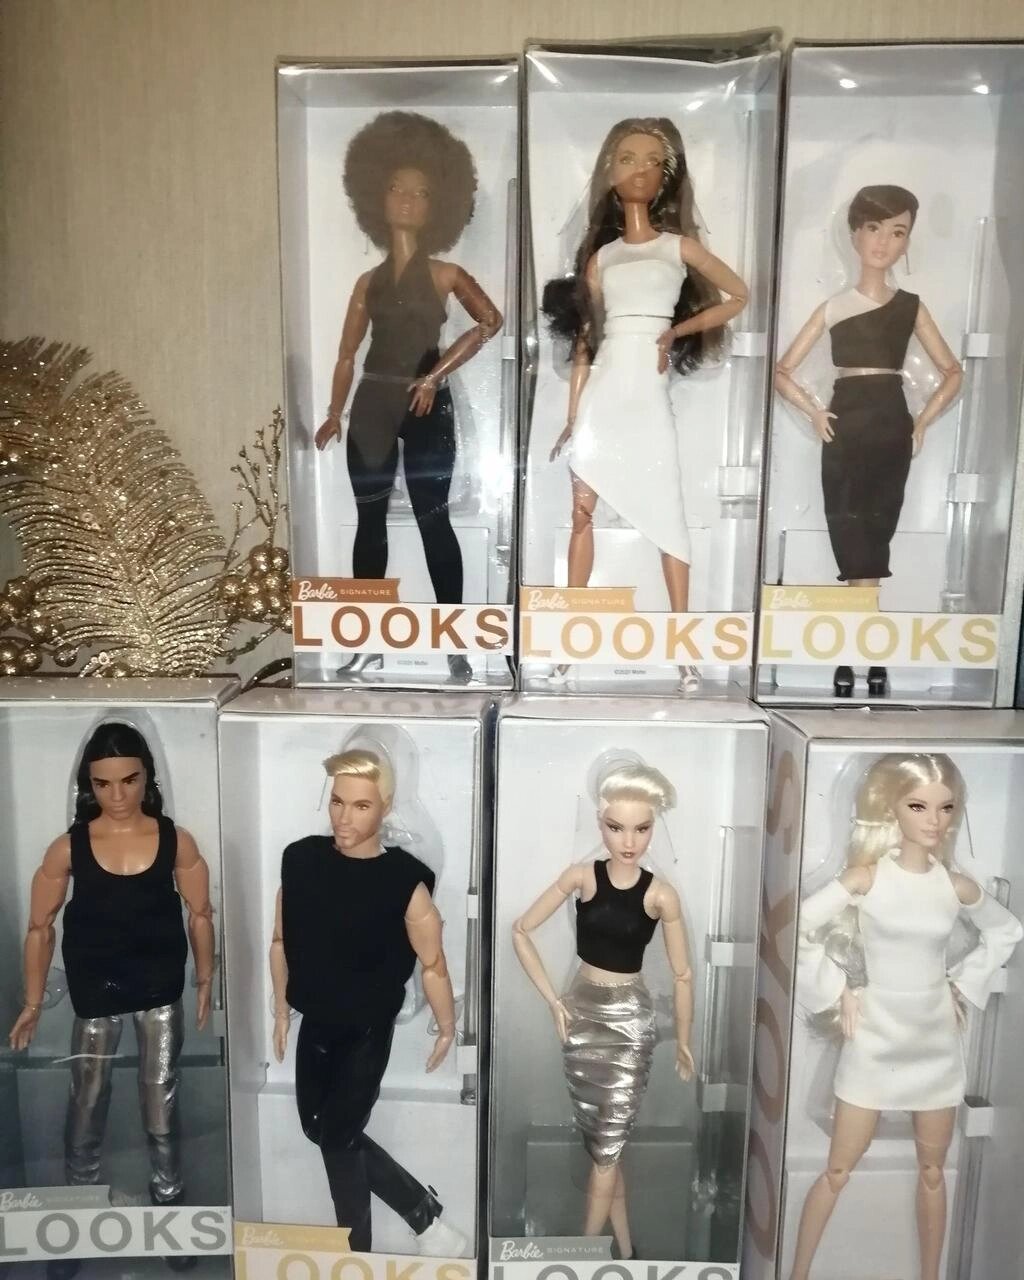 Барби и кен barbie ken лукс looks barbie від компанії K V I T K A - фото 1